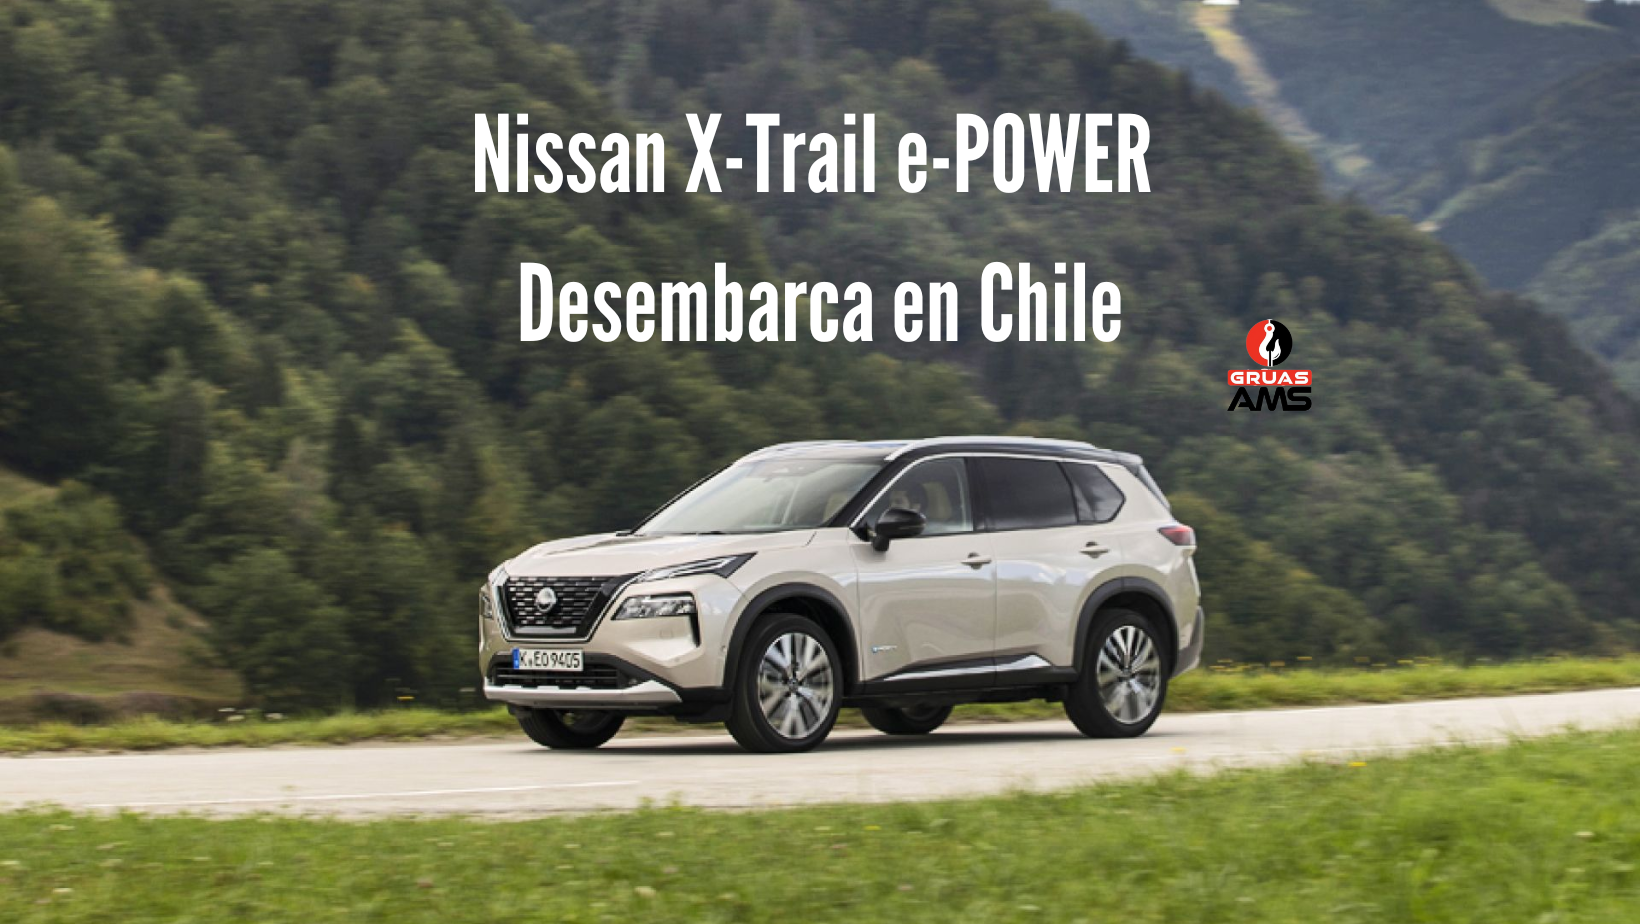 Nissan X-Trail e-POWER chile